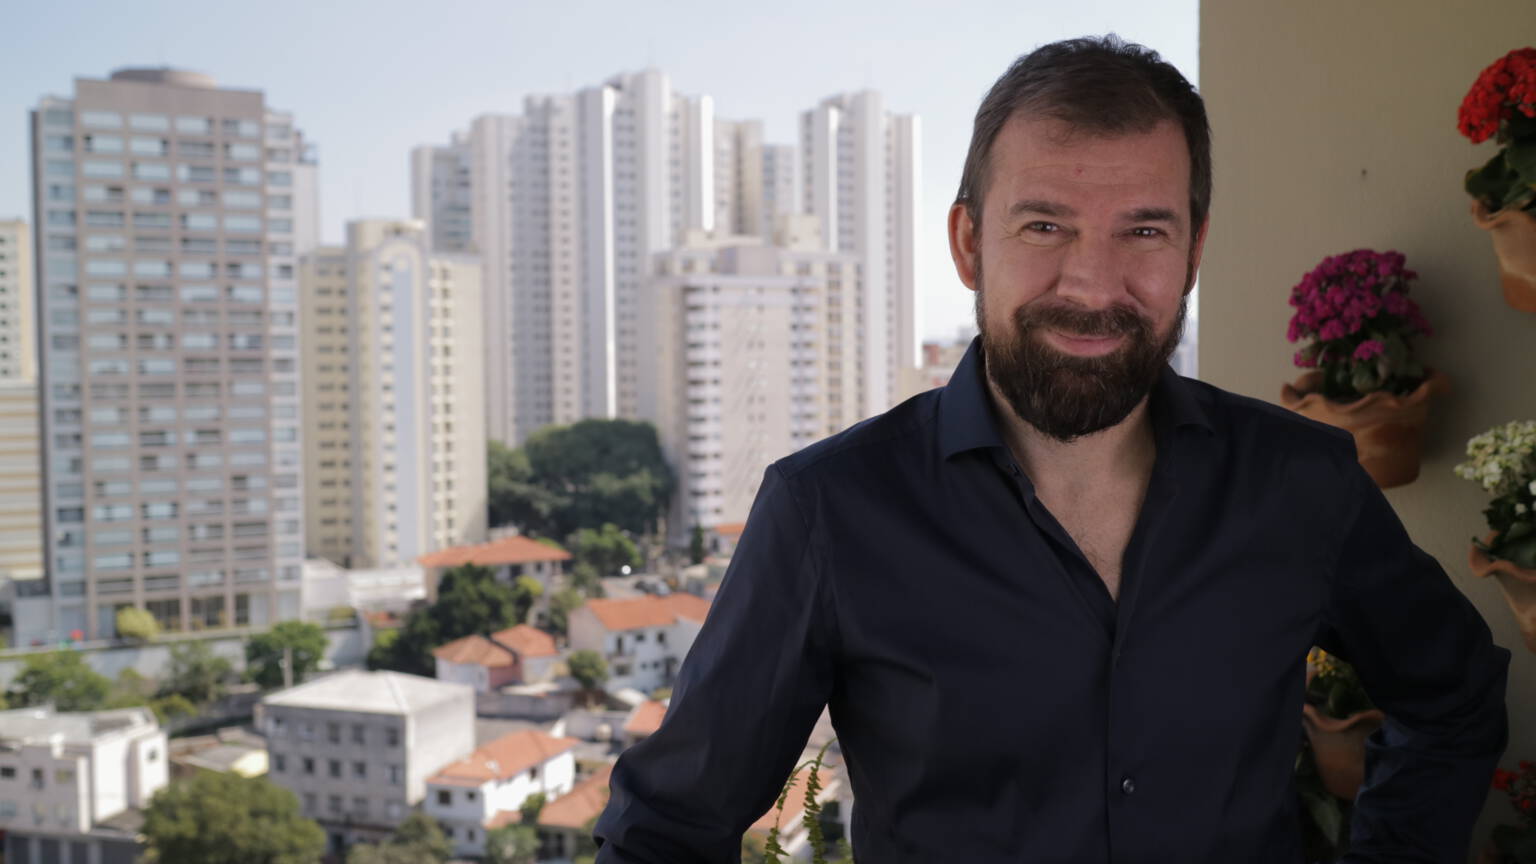 Dutch NOS correspondent Marc Bessems on his balcony in São Paulo, Brazil